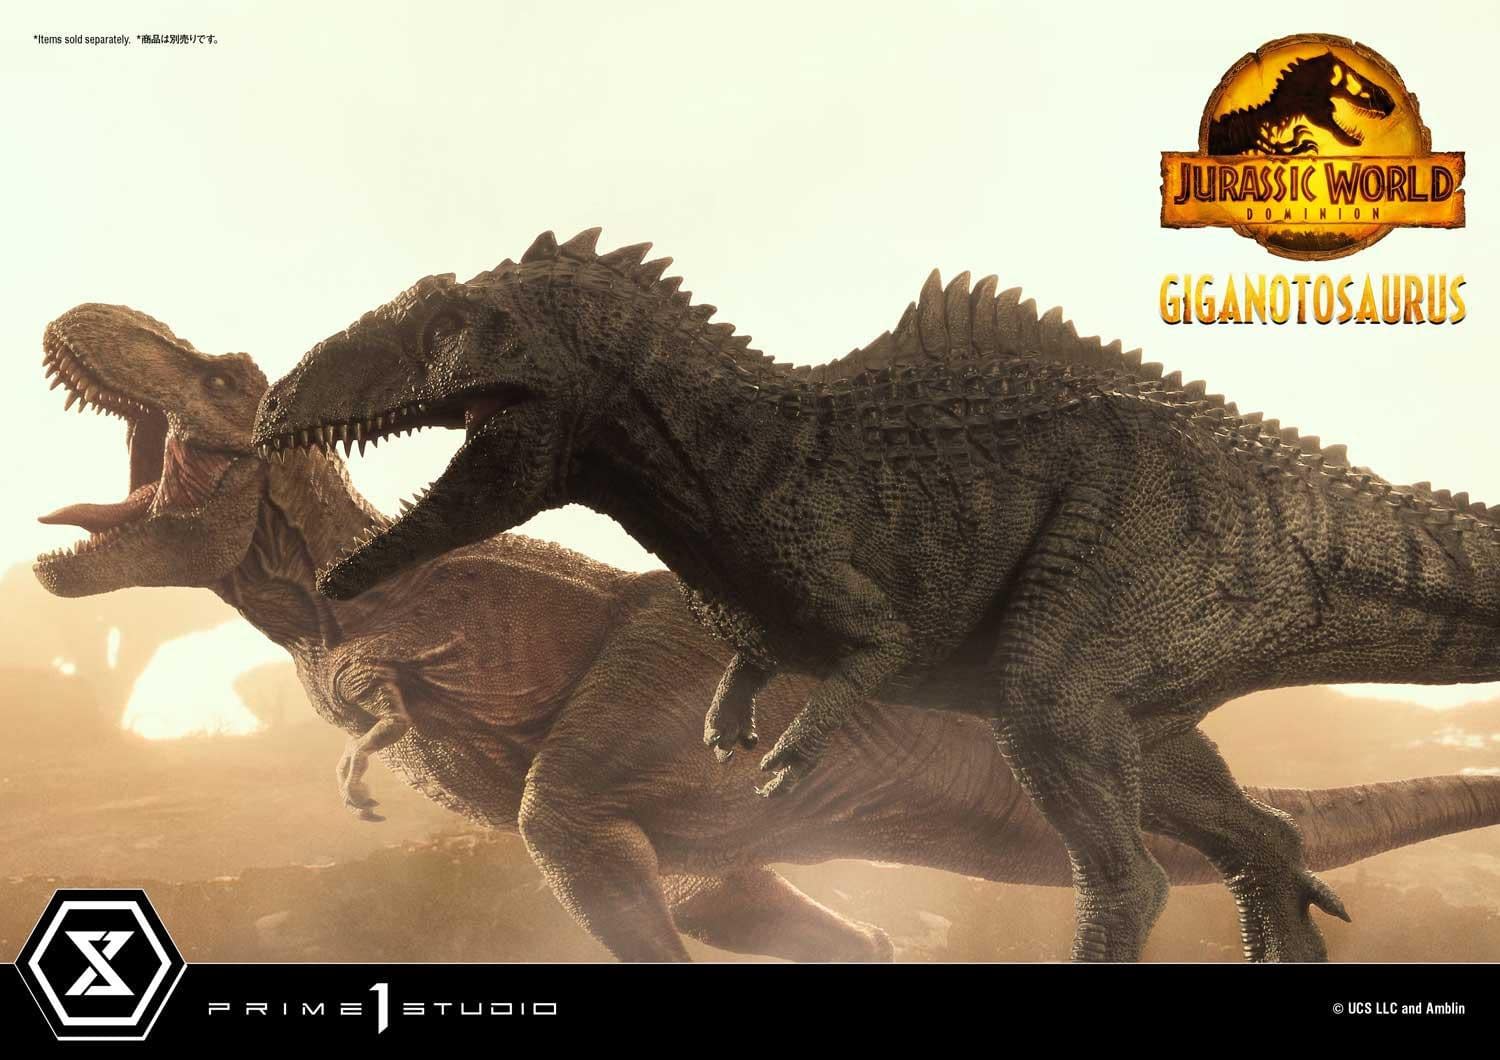 Jurassic World: Dominion Giganotosaurus Has Arrived at Prime 1 Studio